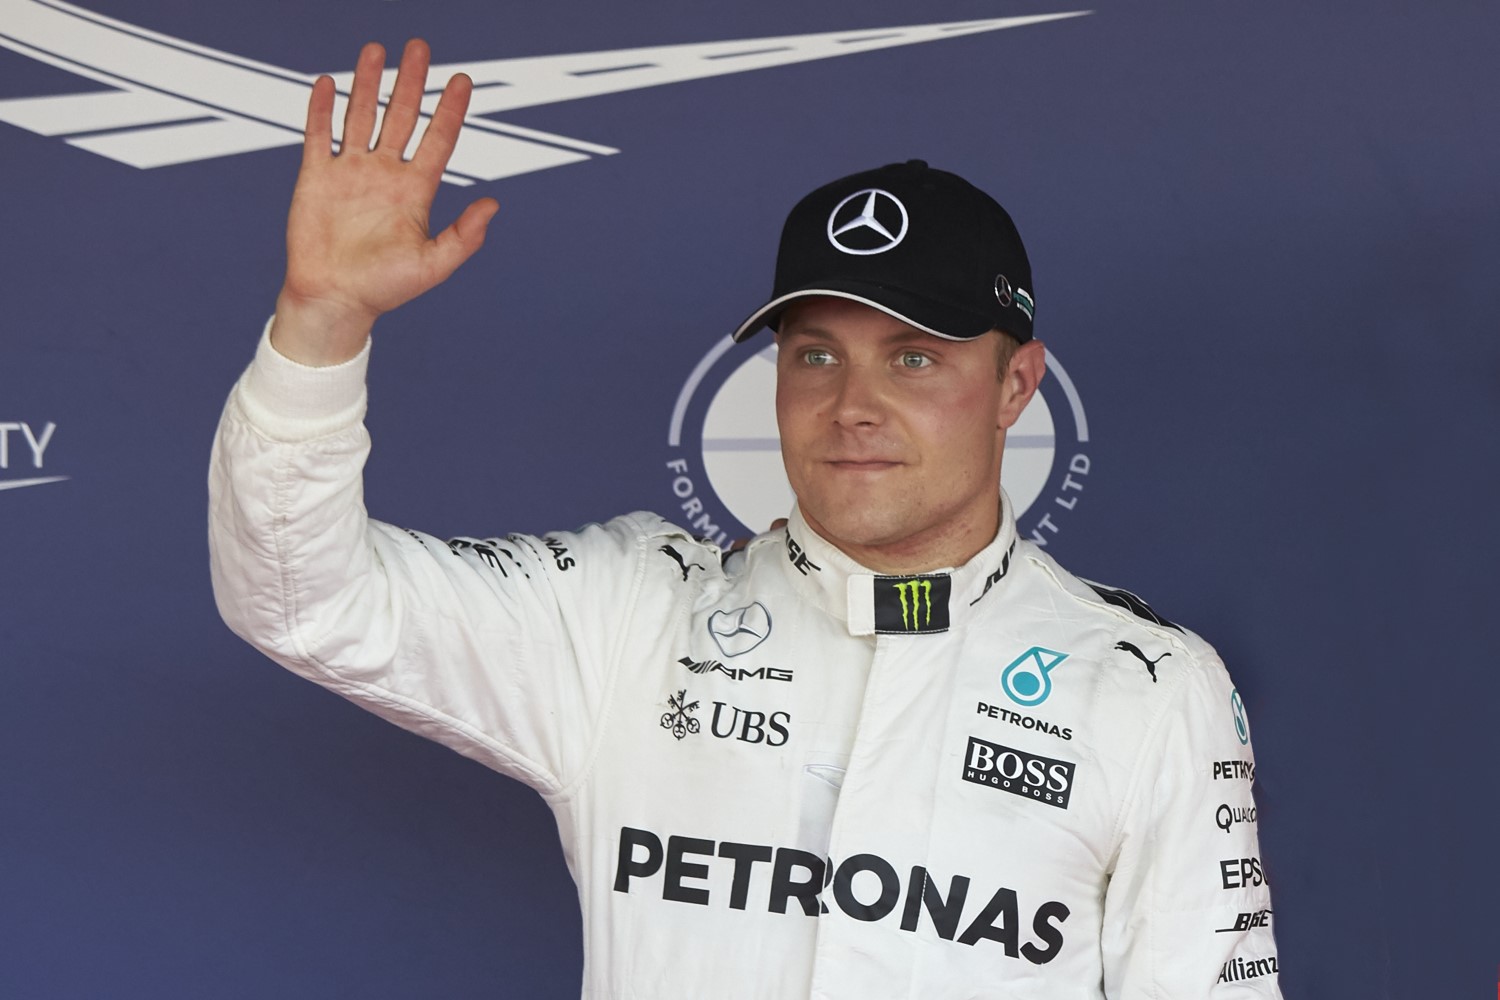 What will Mercedes do if Bottas keeps beating Hamilton?